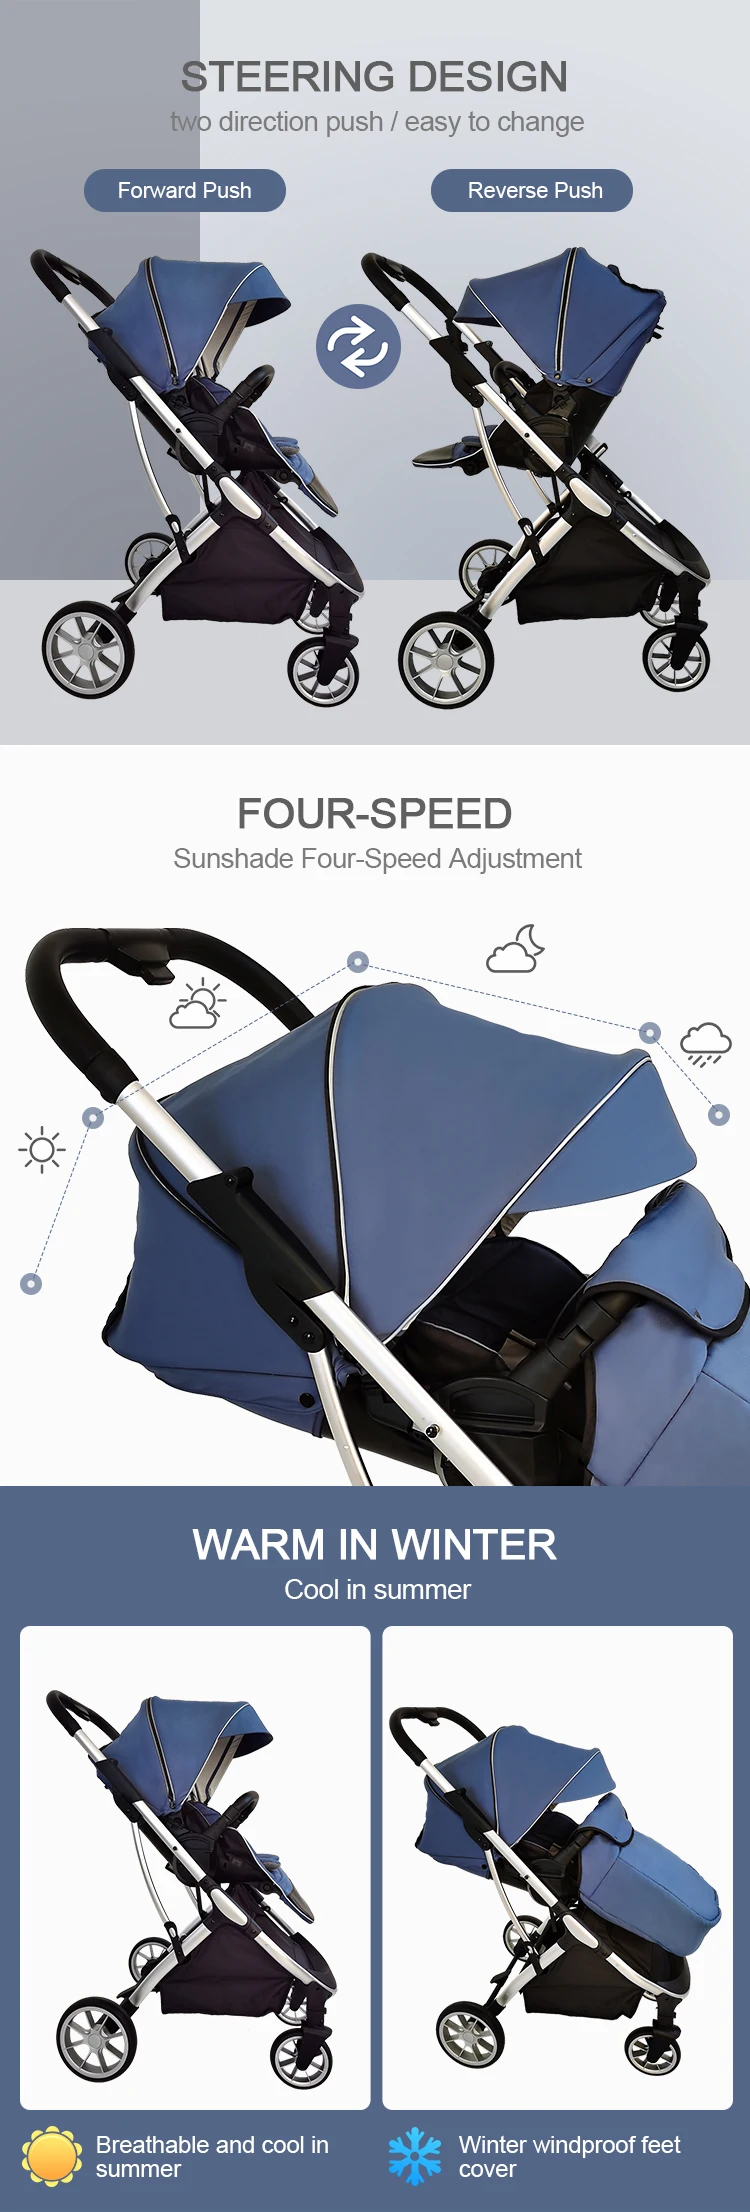 Wholesale Cheap Luxury Travel System Baby Pram Pushchair Car Seat 3 In 1 Baby Stroller